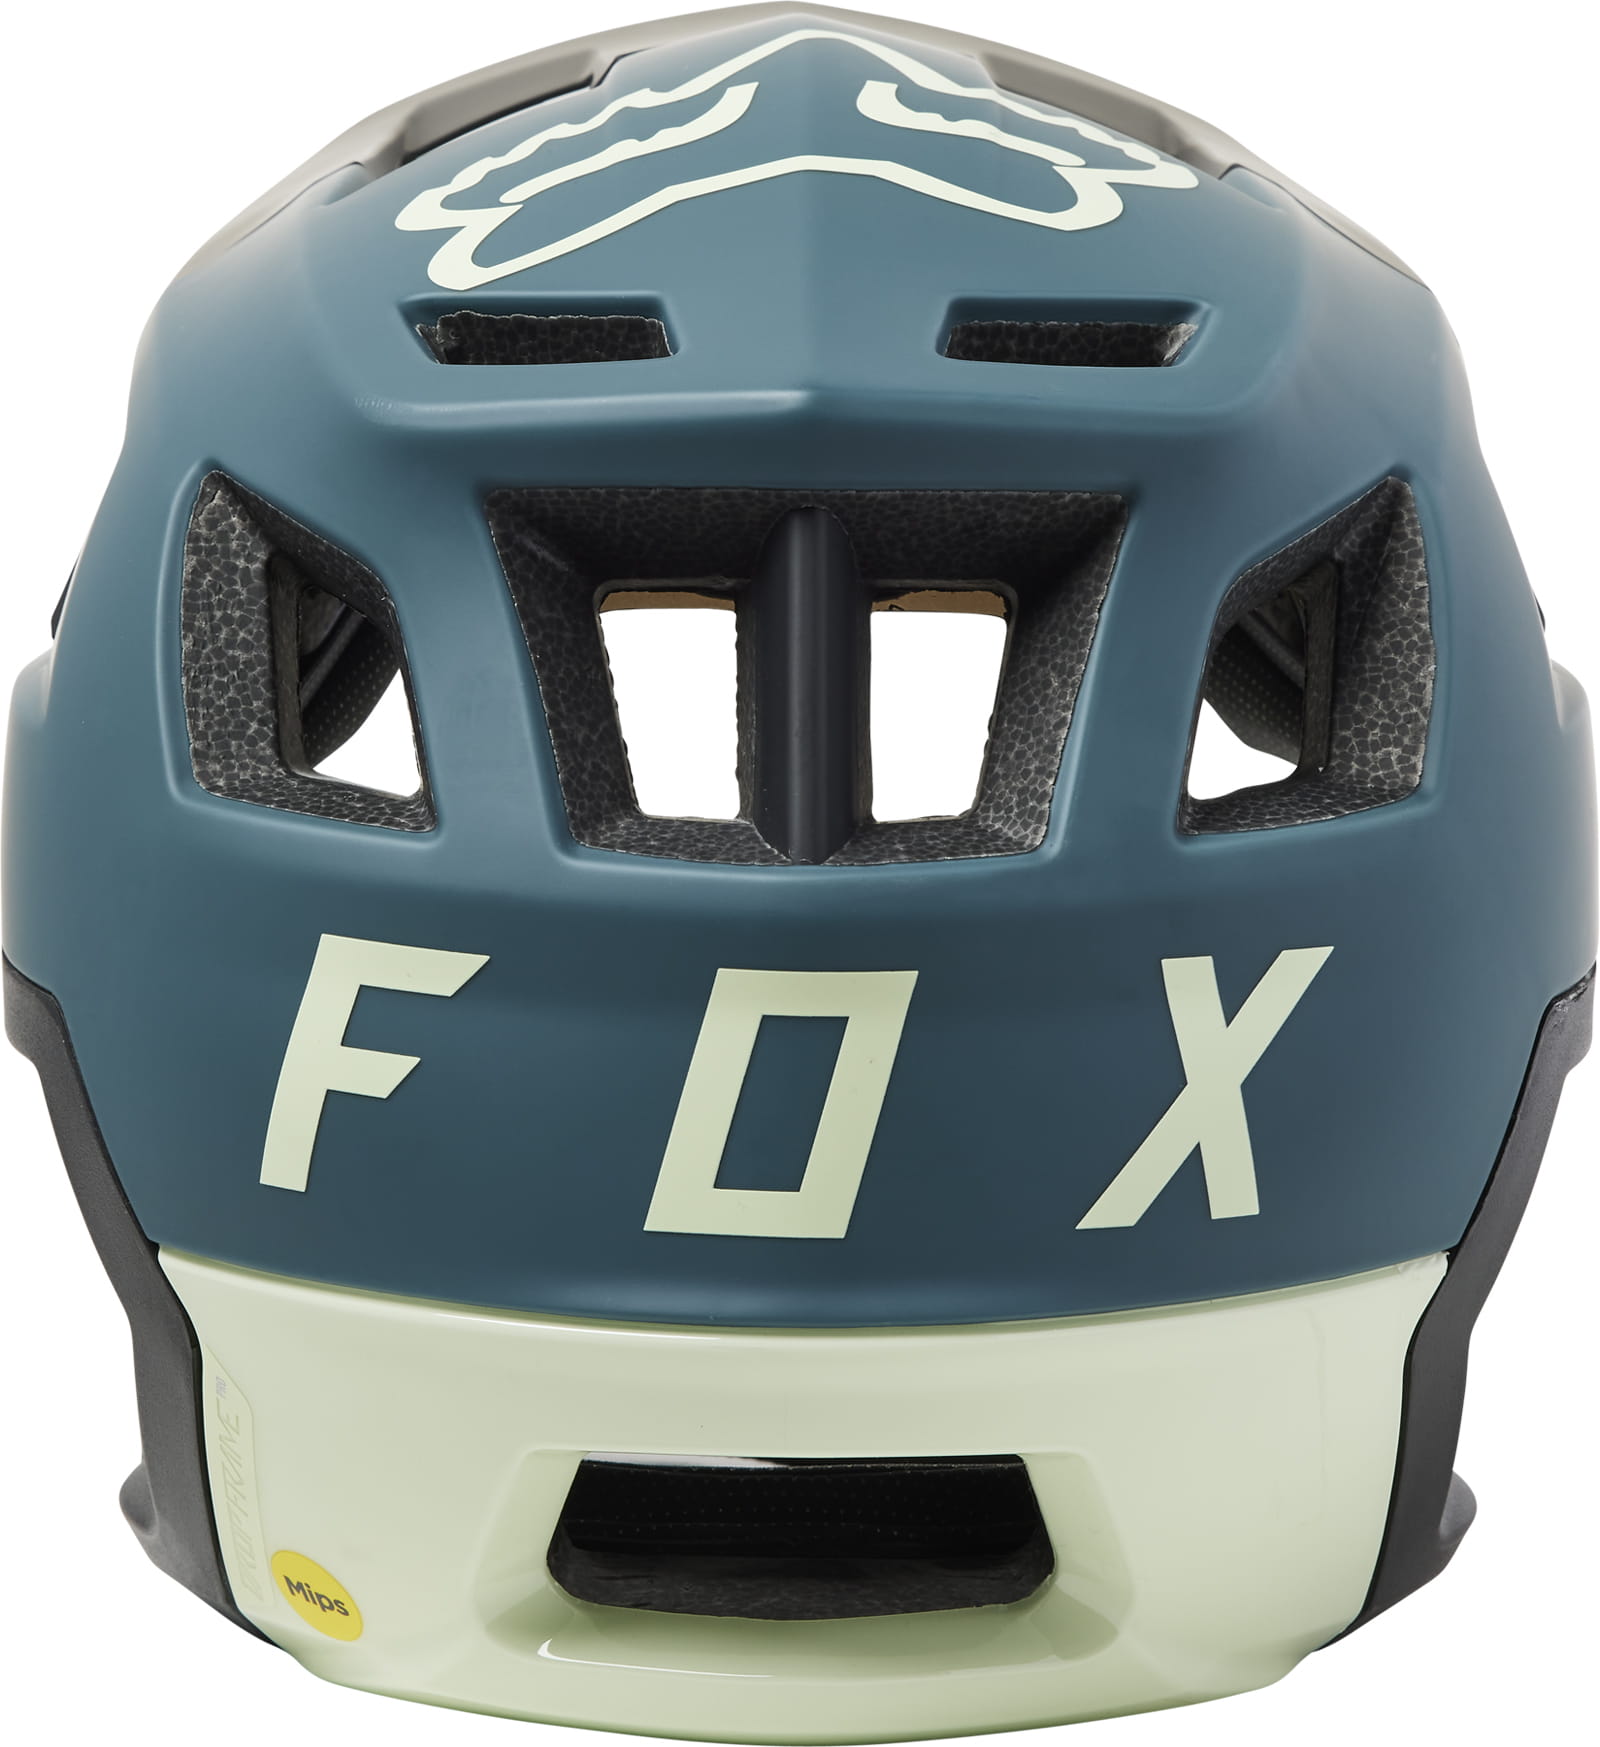 Dropframe Pro Helmet, CE - emerald | MTB Helmets | Helmets | Clothing ...